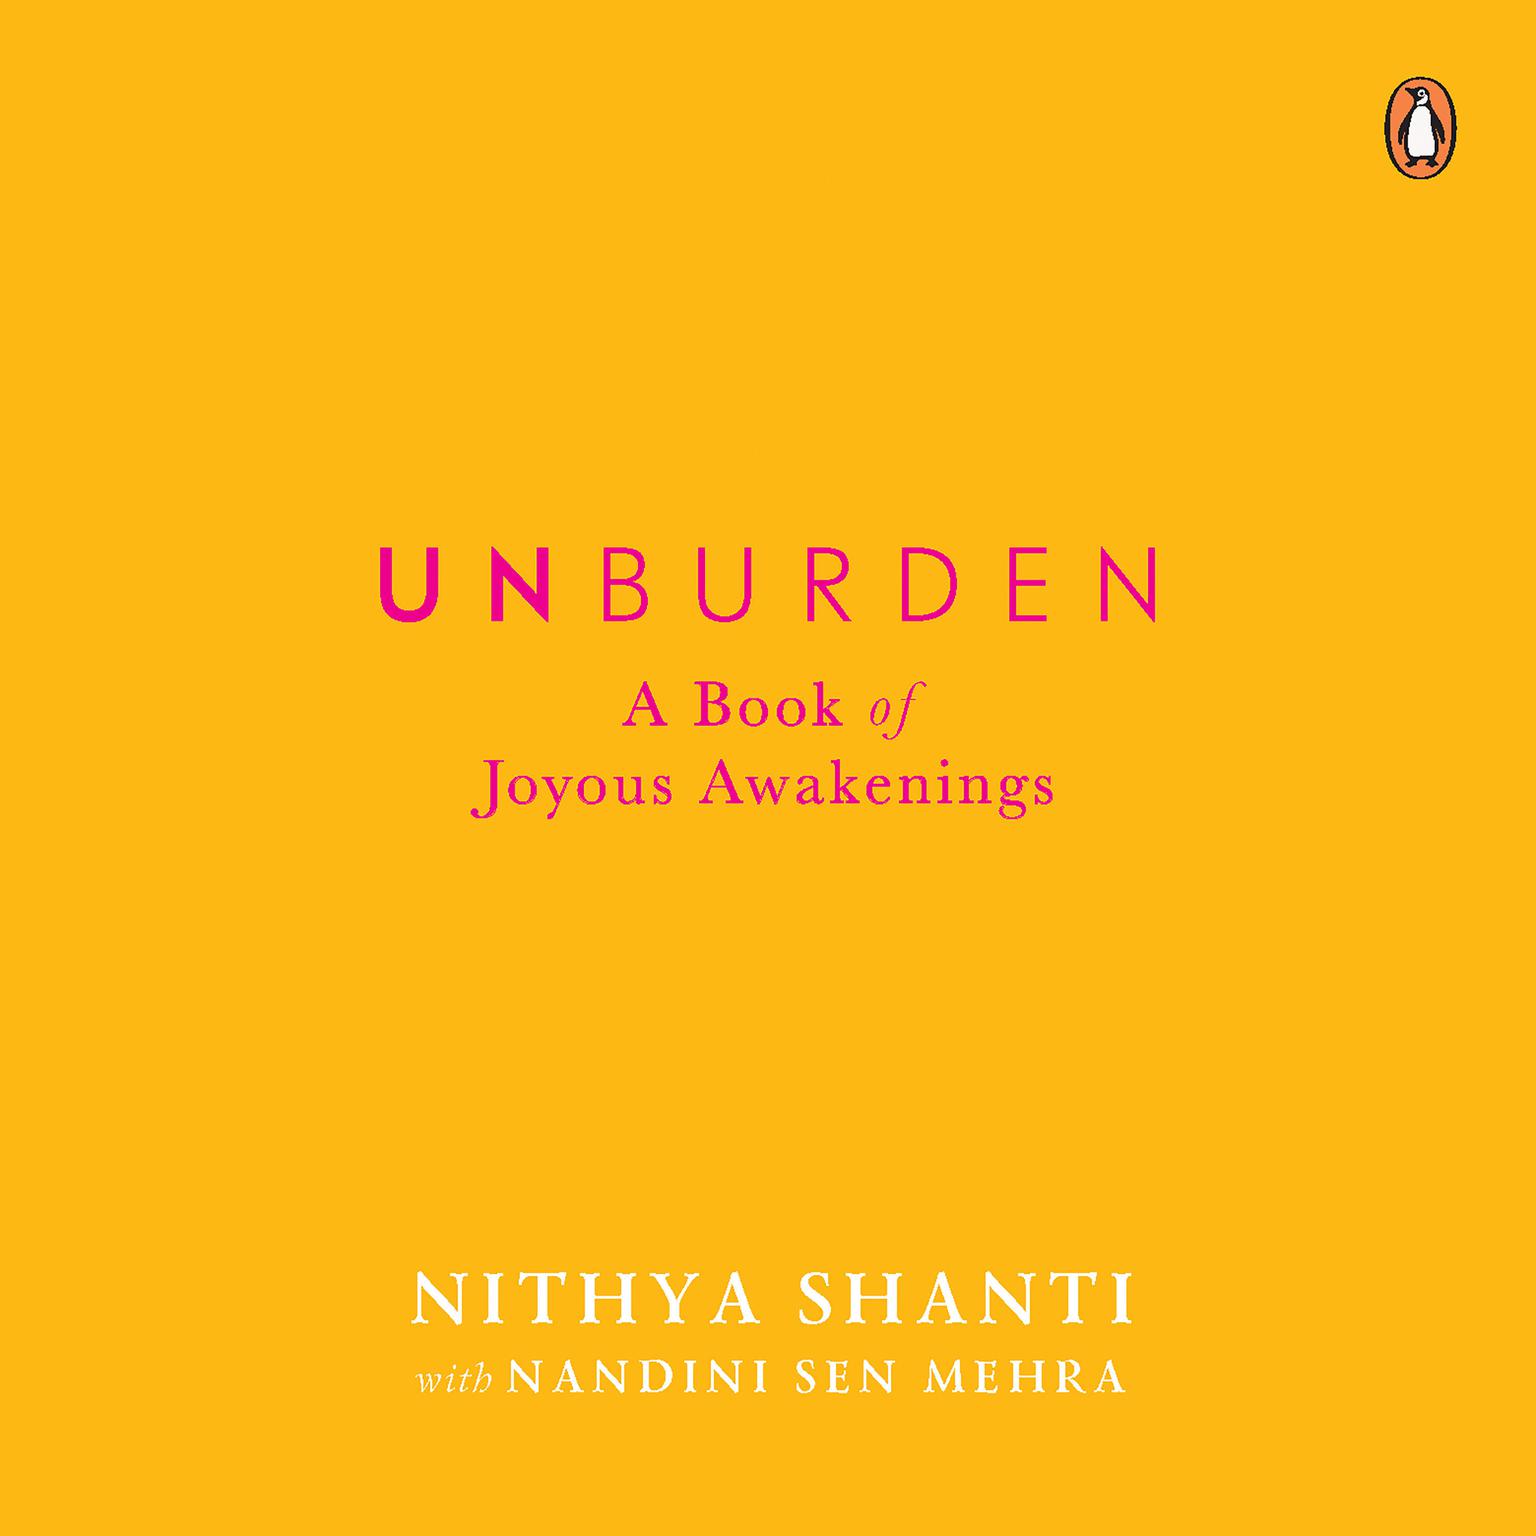 Unburden: A Book of Joyous Awakenings Audiobook, by Nandini Sen